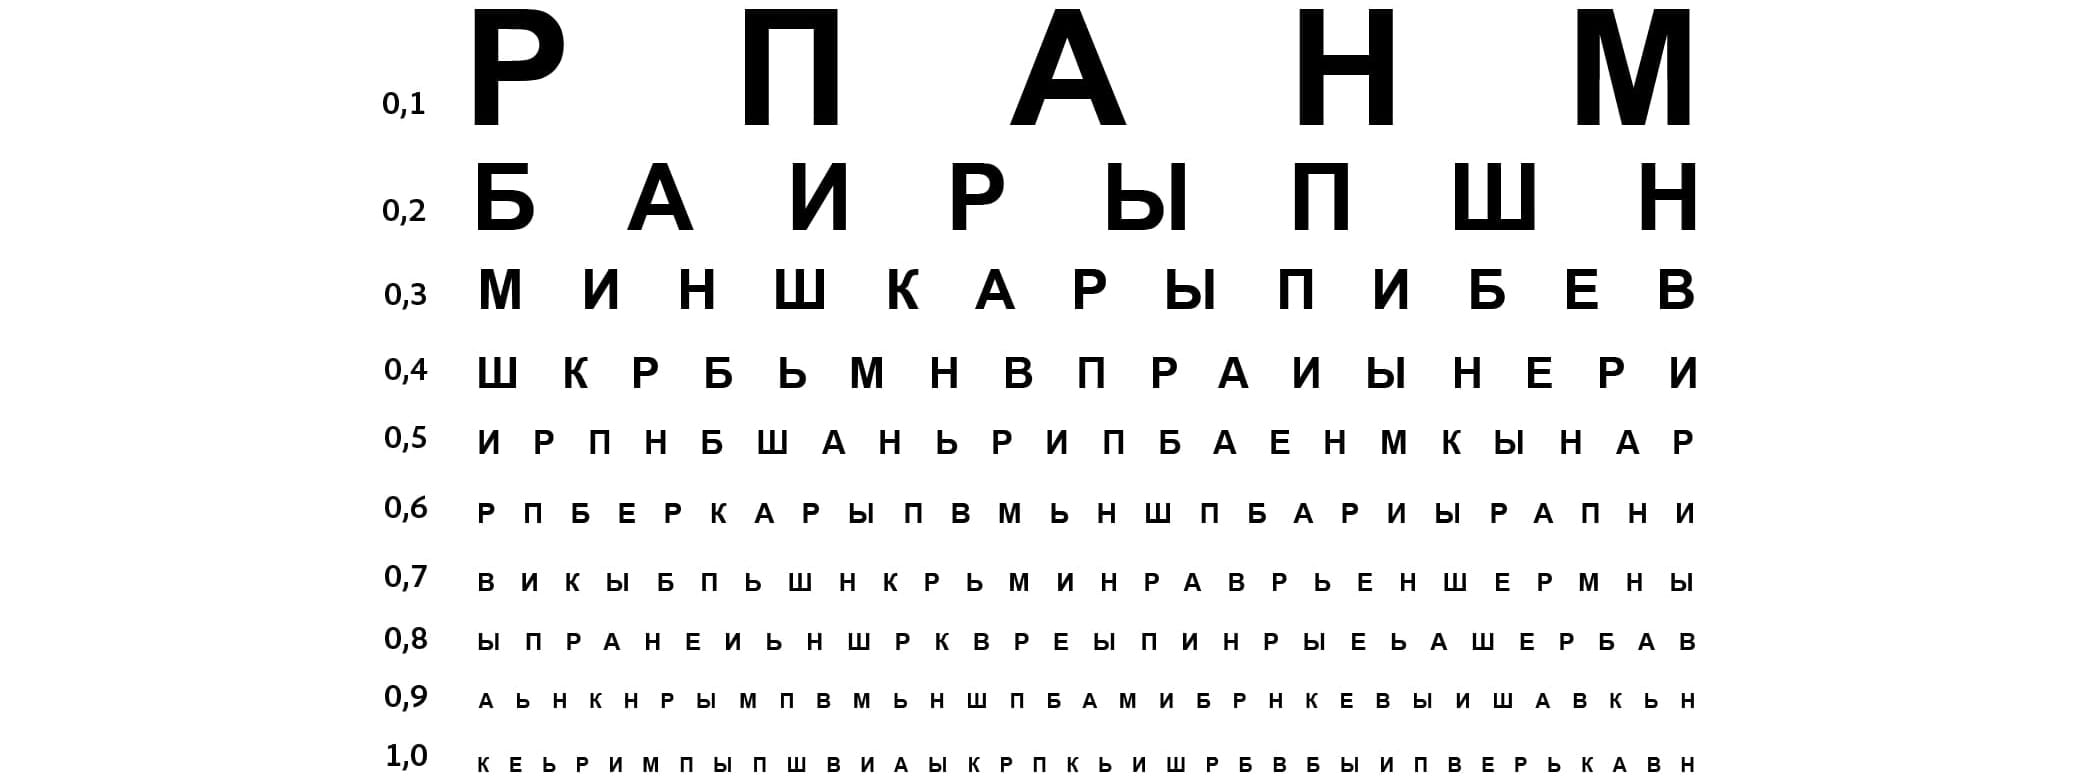 Глаз и зрение тест. Проверка зрения таблица букв. Острота зрения для окулиста. Таблица с буквами для проверки. Таблица для проверки зрения у окулиста Сивцева.